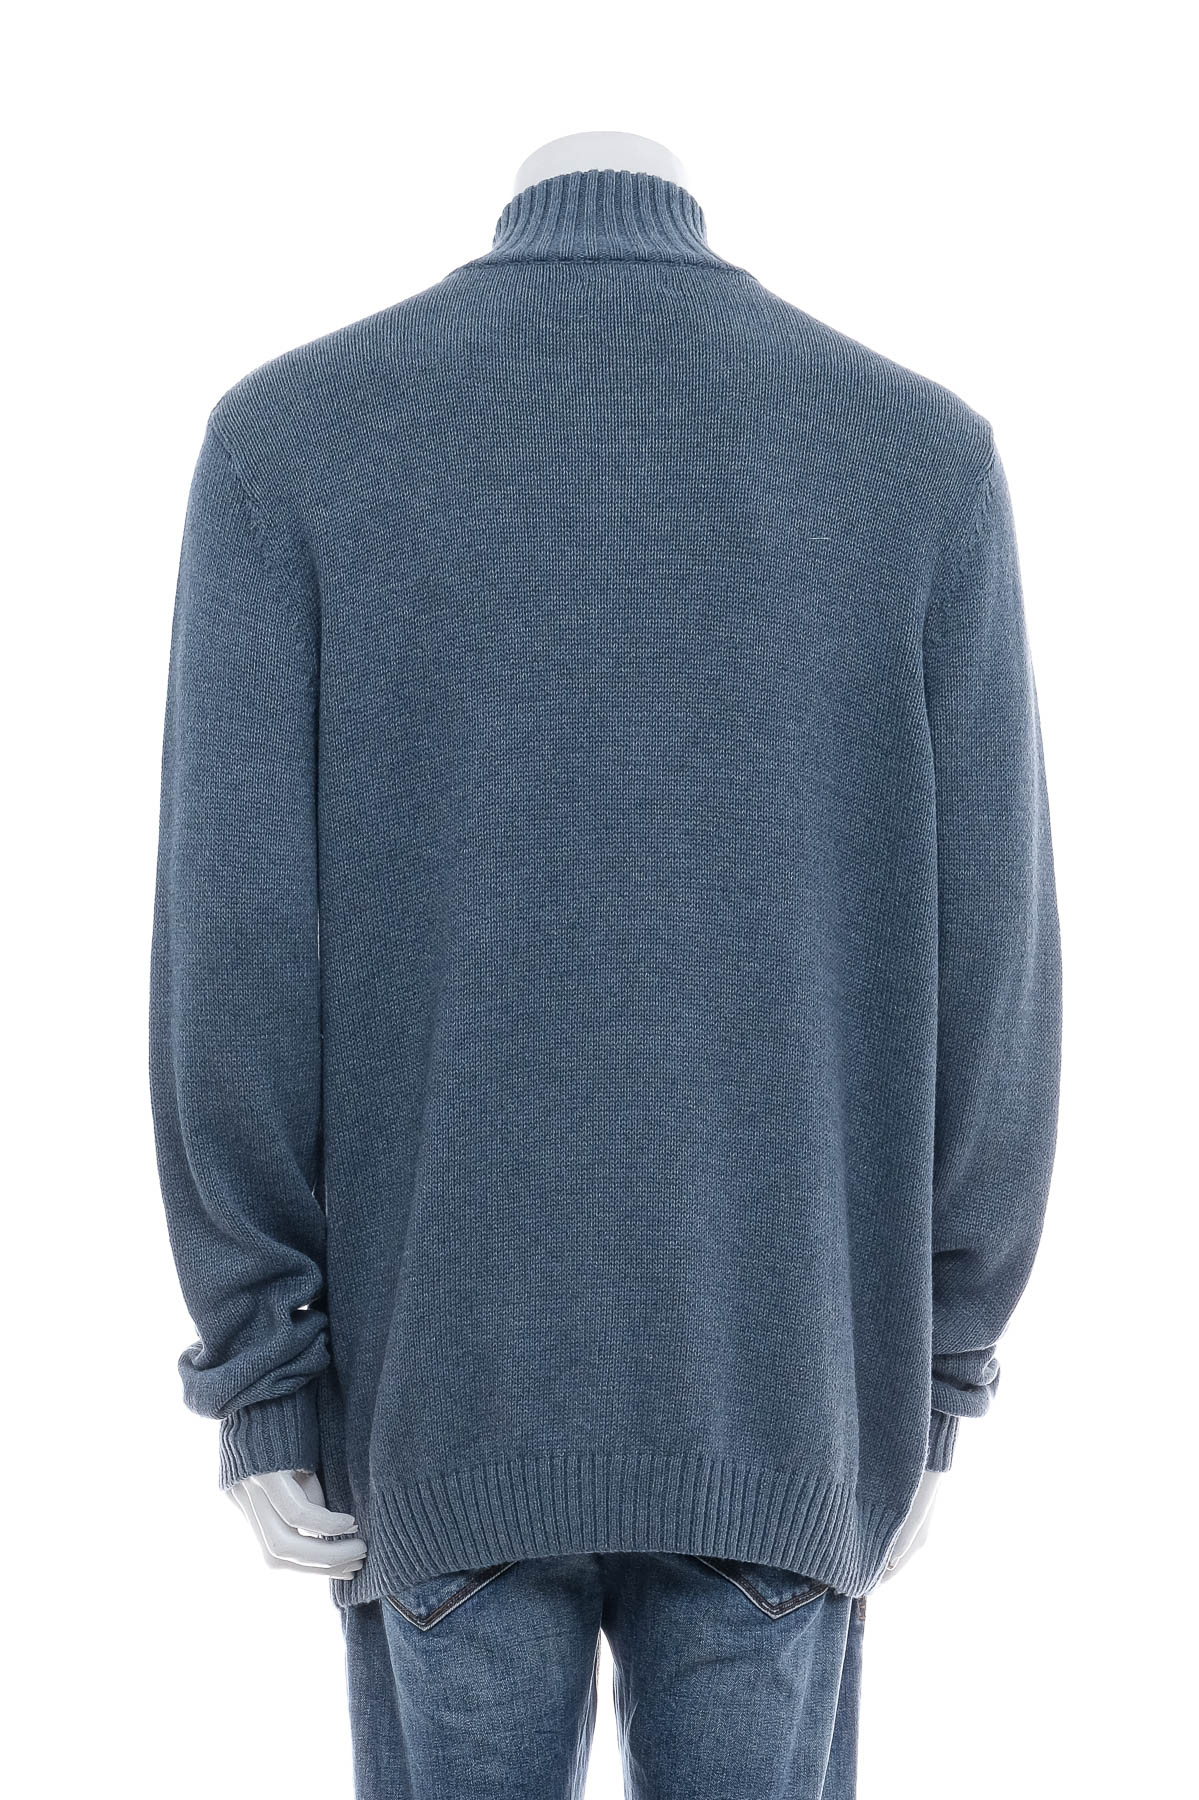 Men's sweater - Croft & Barrow - 1